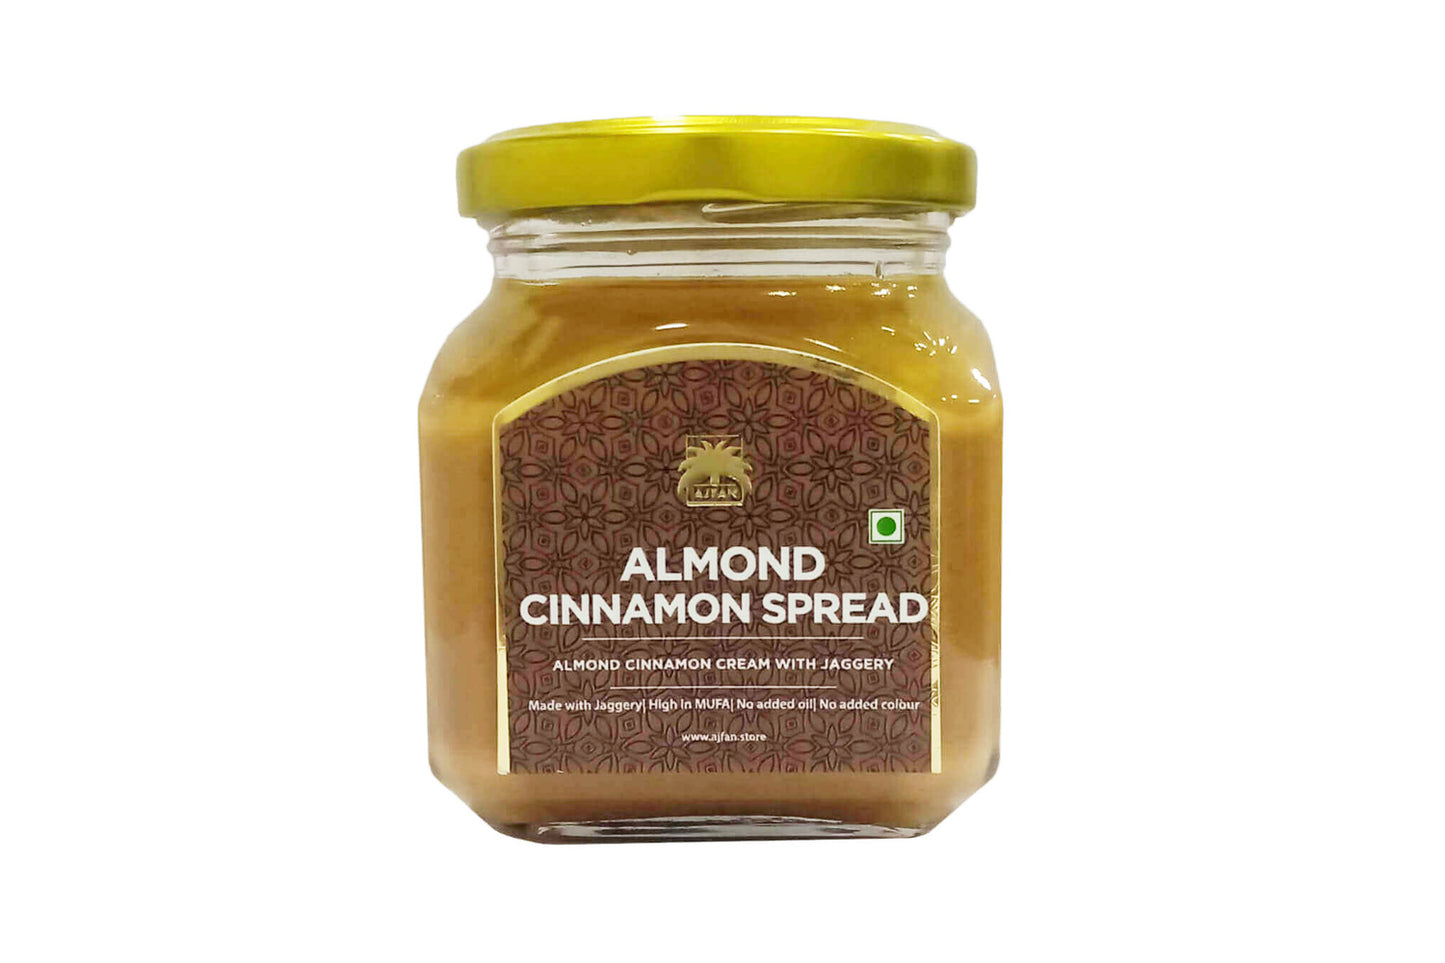 Almond Cinnamon Spread with Jaggery